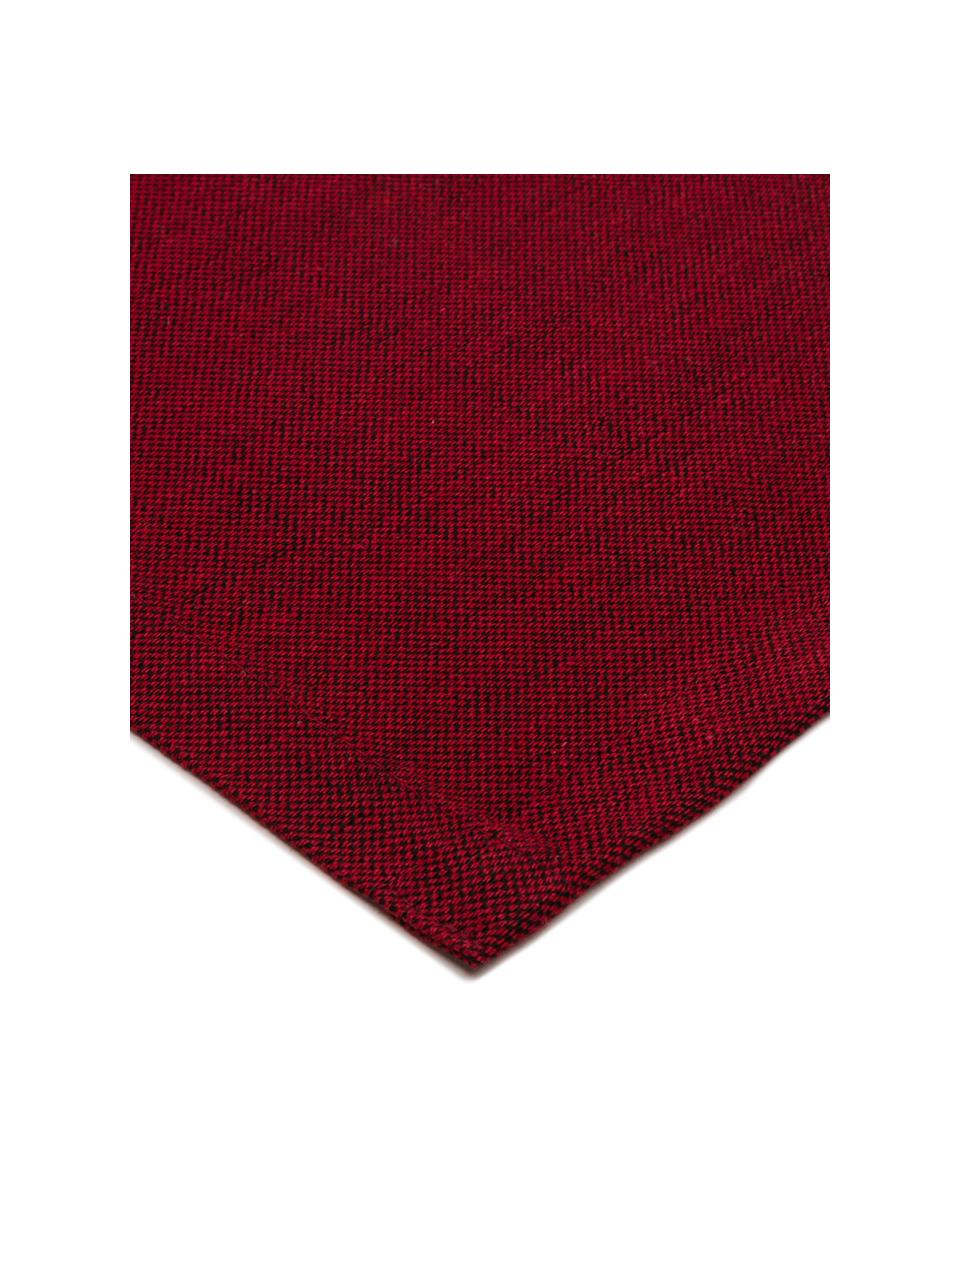 Tafelloper Riva van katoenmix in rood, 55% katoen, 45% polyester, Rood, B 40 x L 150 cm